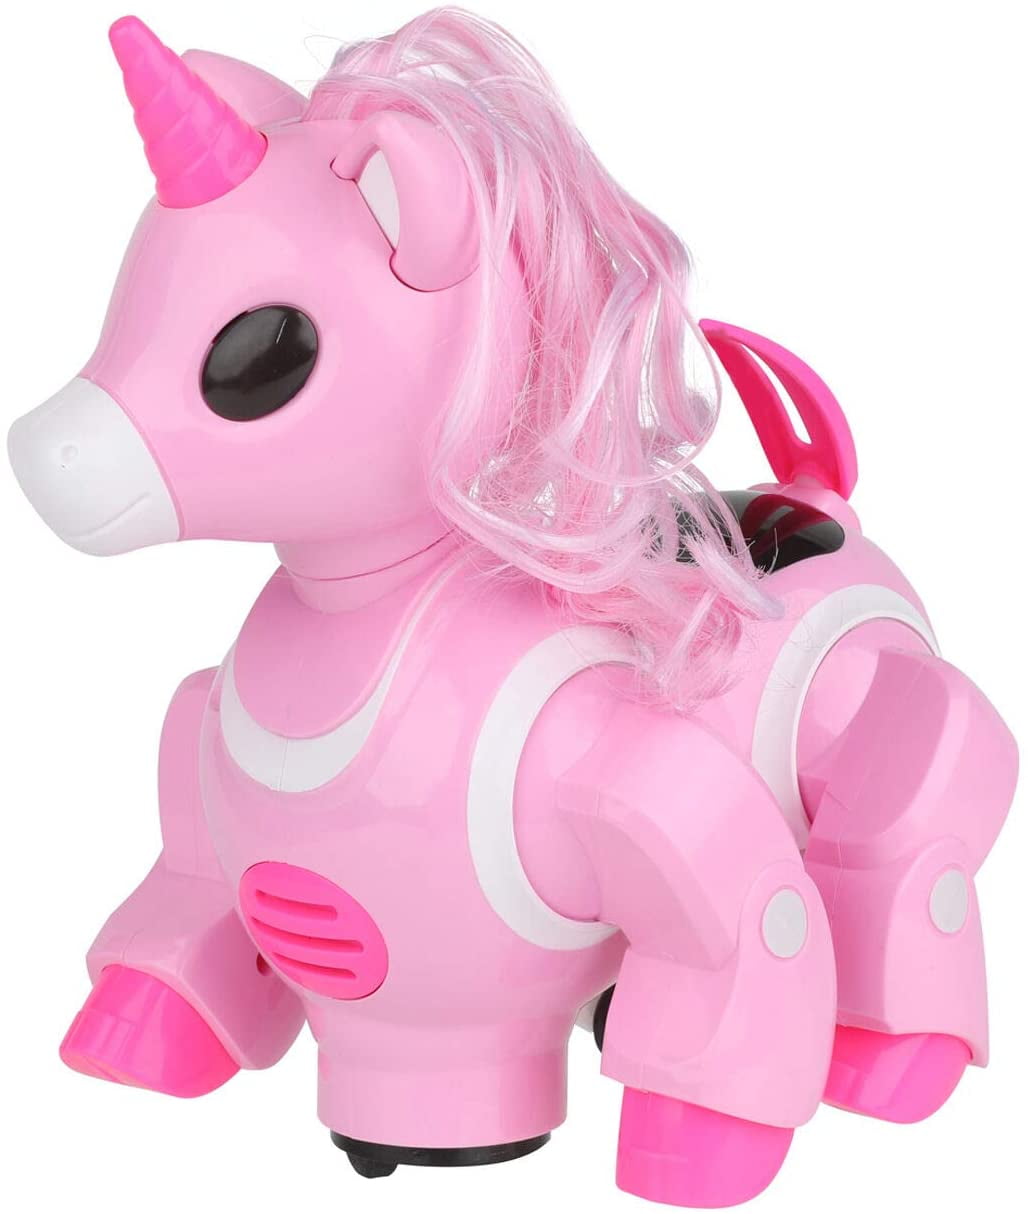 Vivitar Robo Dancing Unicorn Robot Pink/Purple Toy Gift Present 